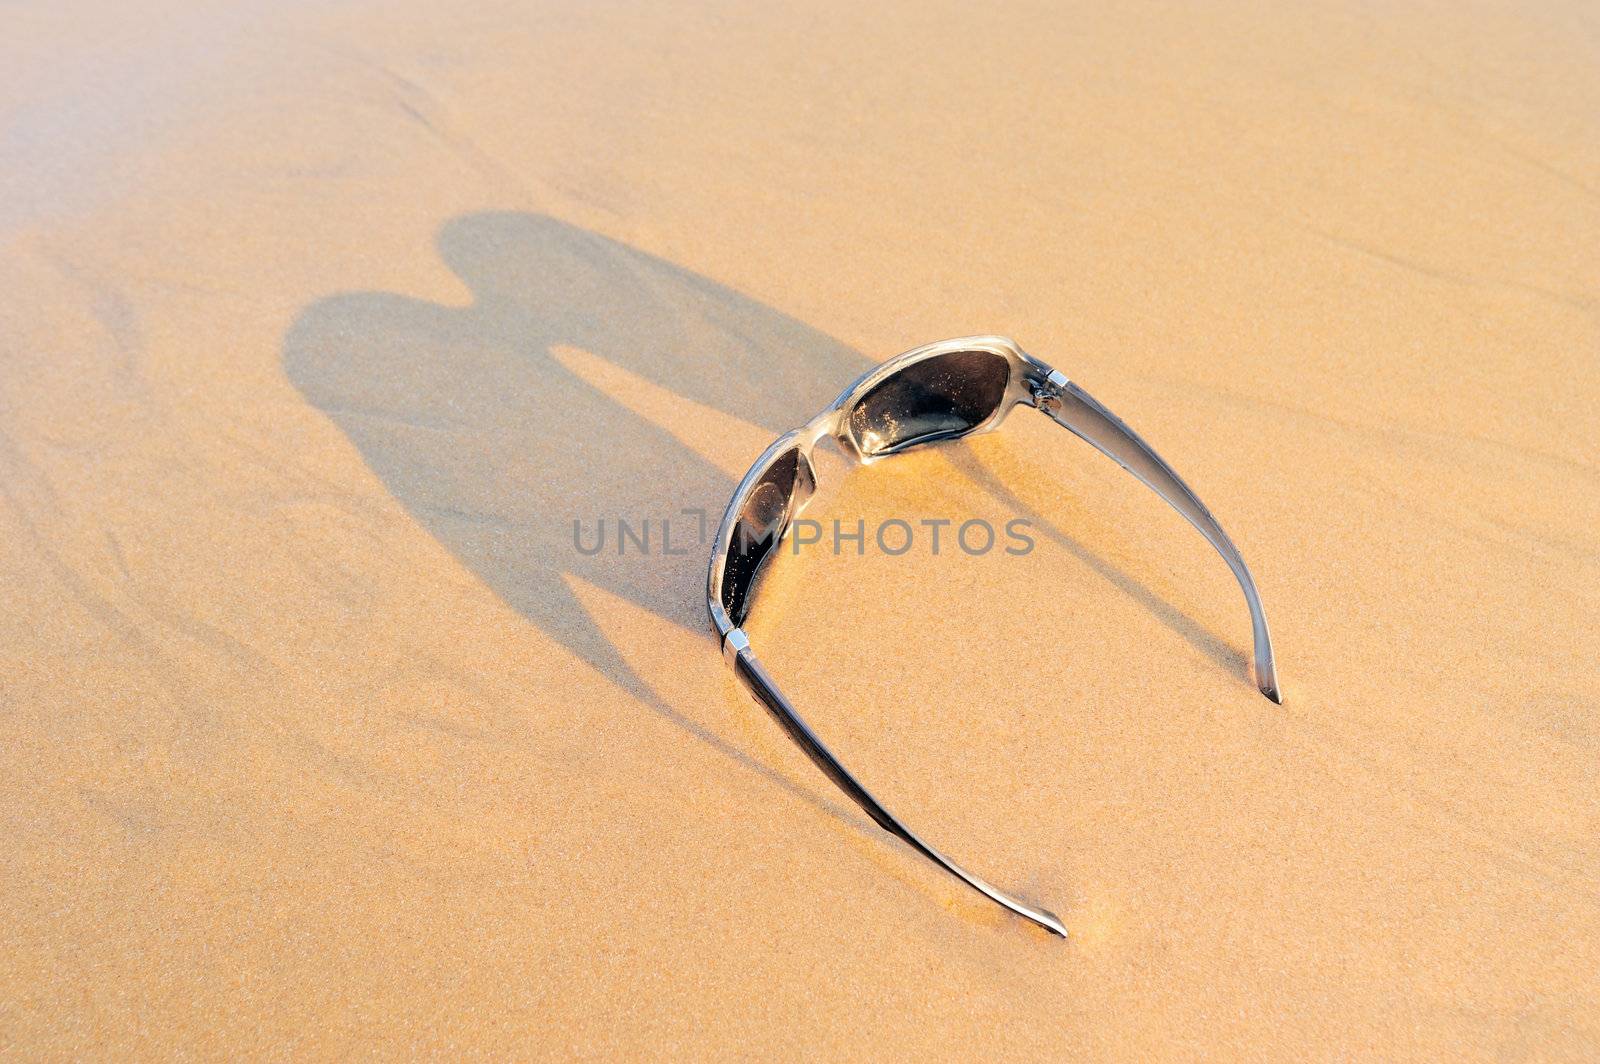 Sunglasses on the sandy beach at the sea